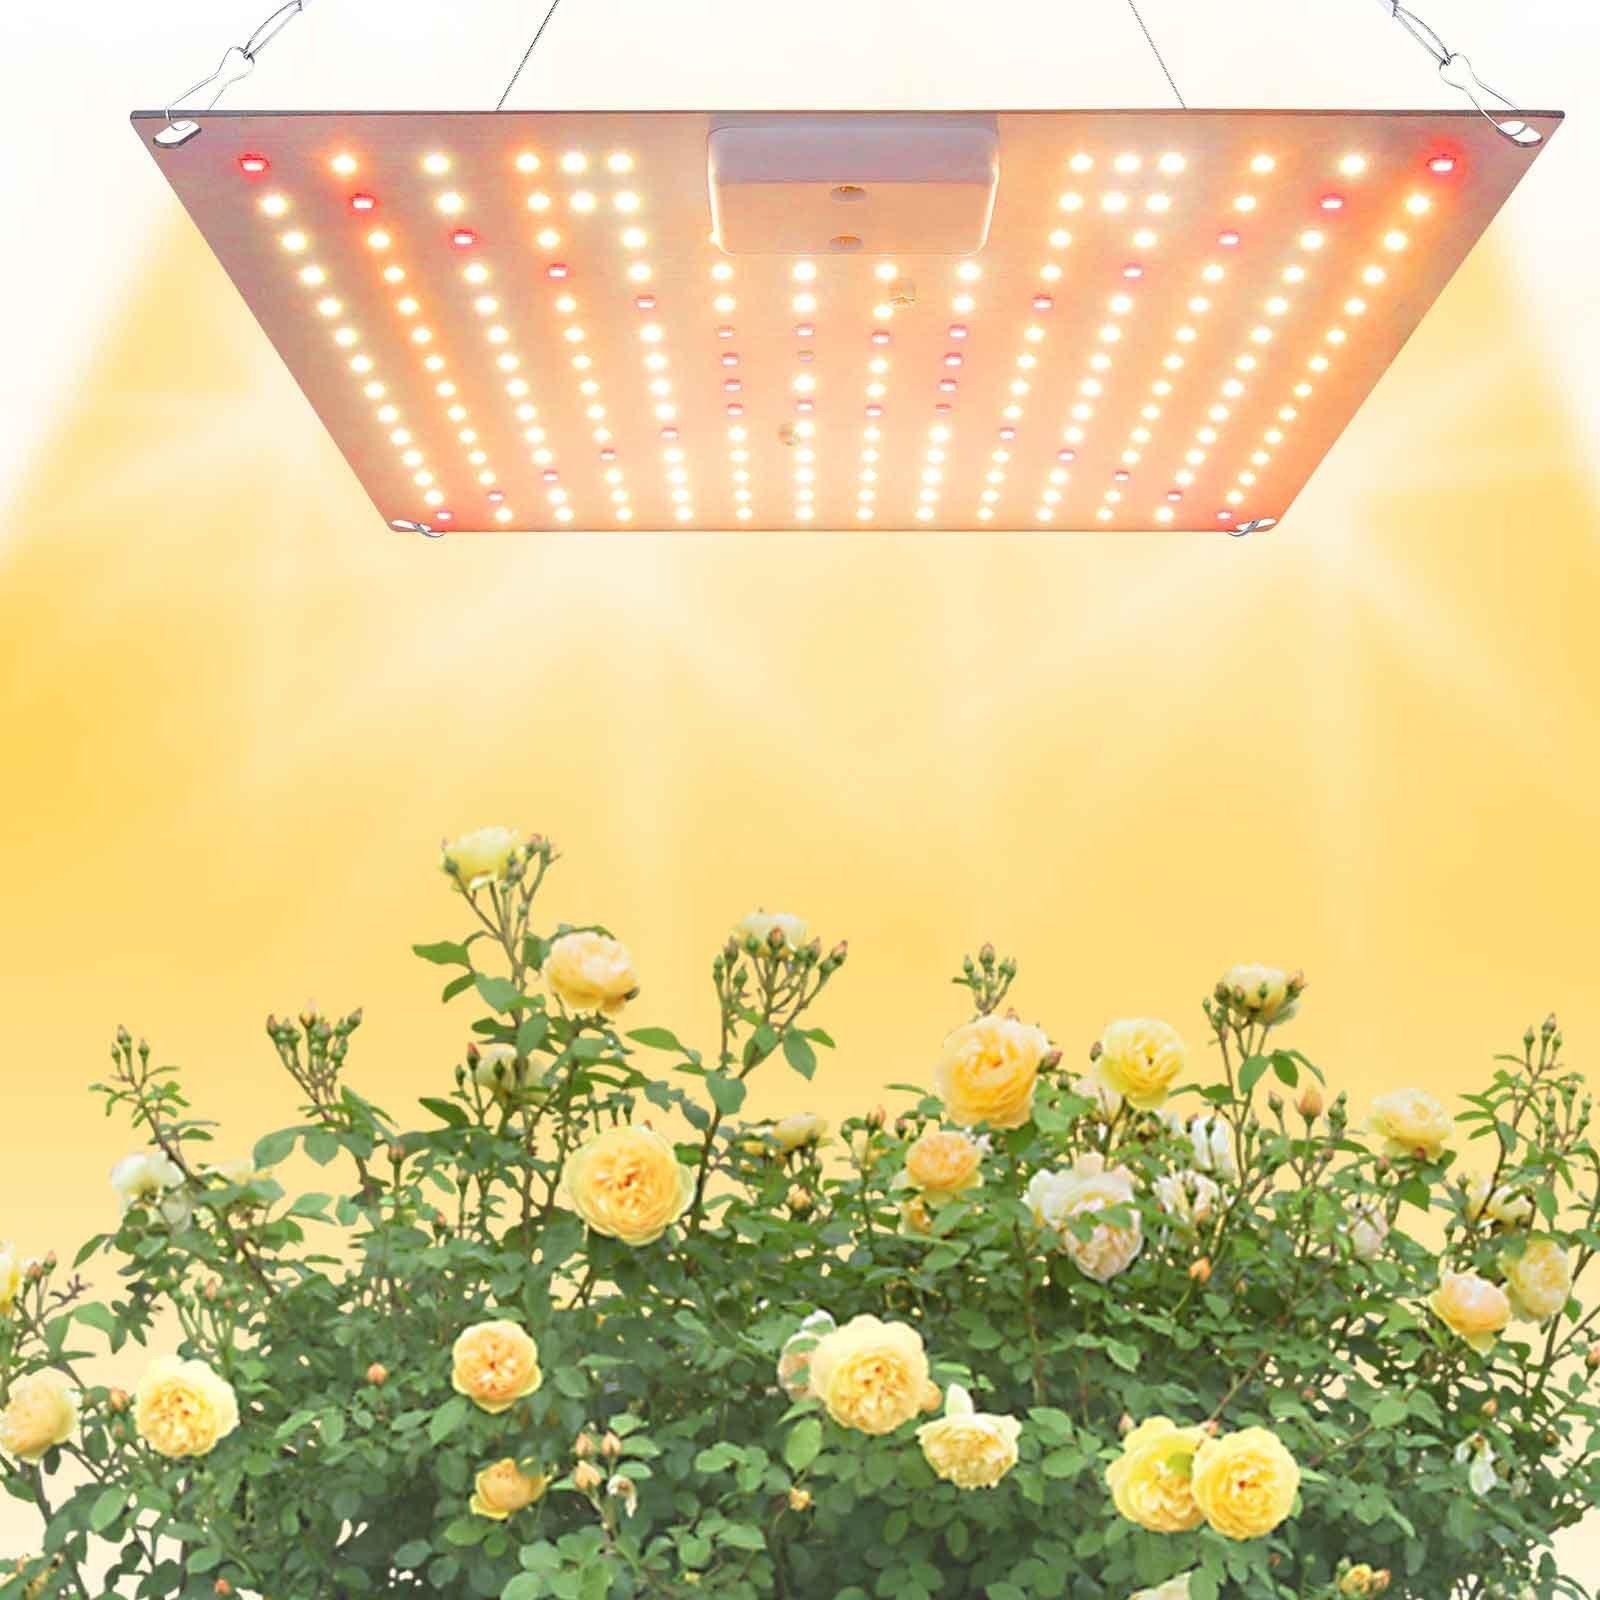 Sunicol Pflanzenlampe 25/45/65W, 192/240/360LEDs, mit Gänseblümchenkette, LEDs, 3000K Warmweiß, 5000K Weiß, 620nm Rot, 385nm UV, 730nm IR